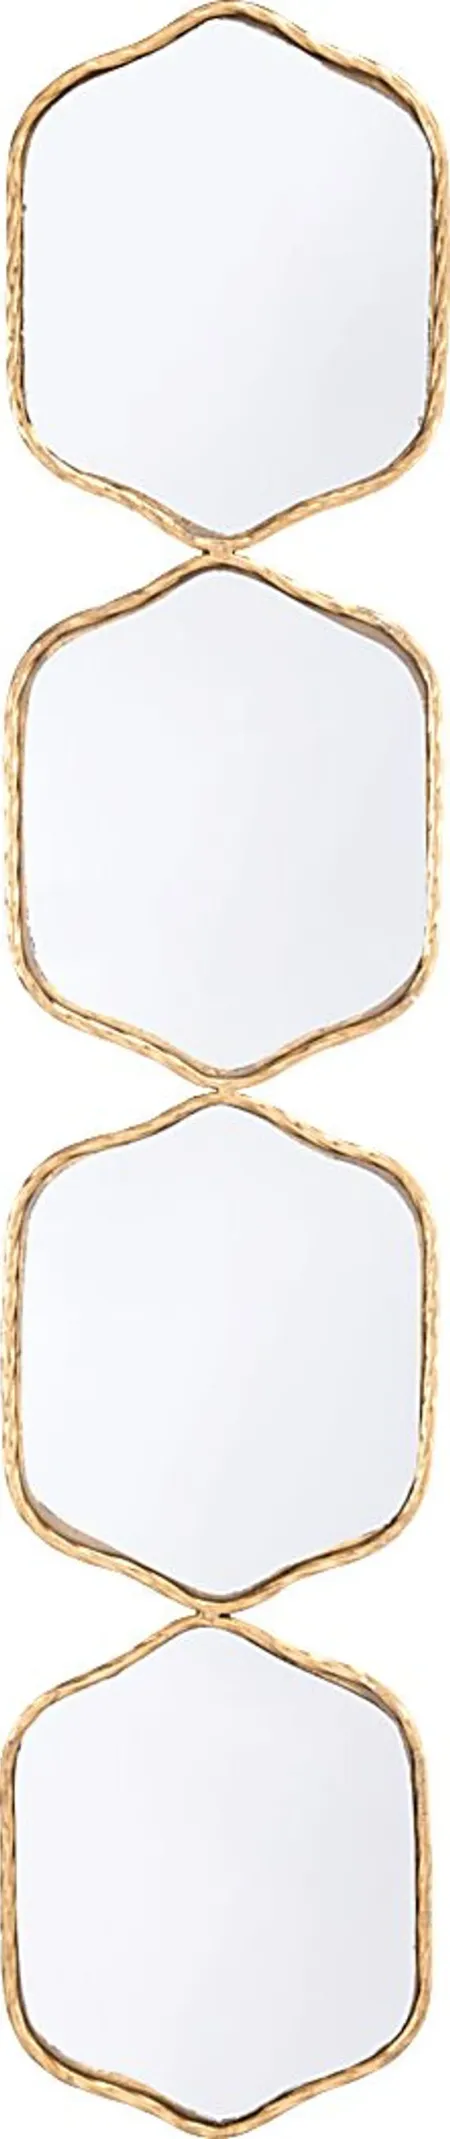 Manderley Gold Mirror